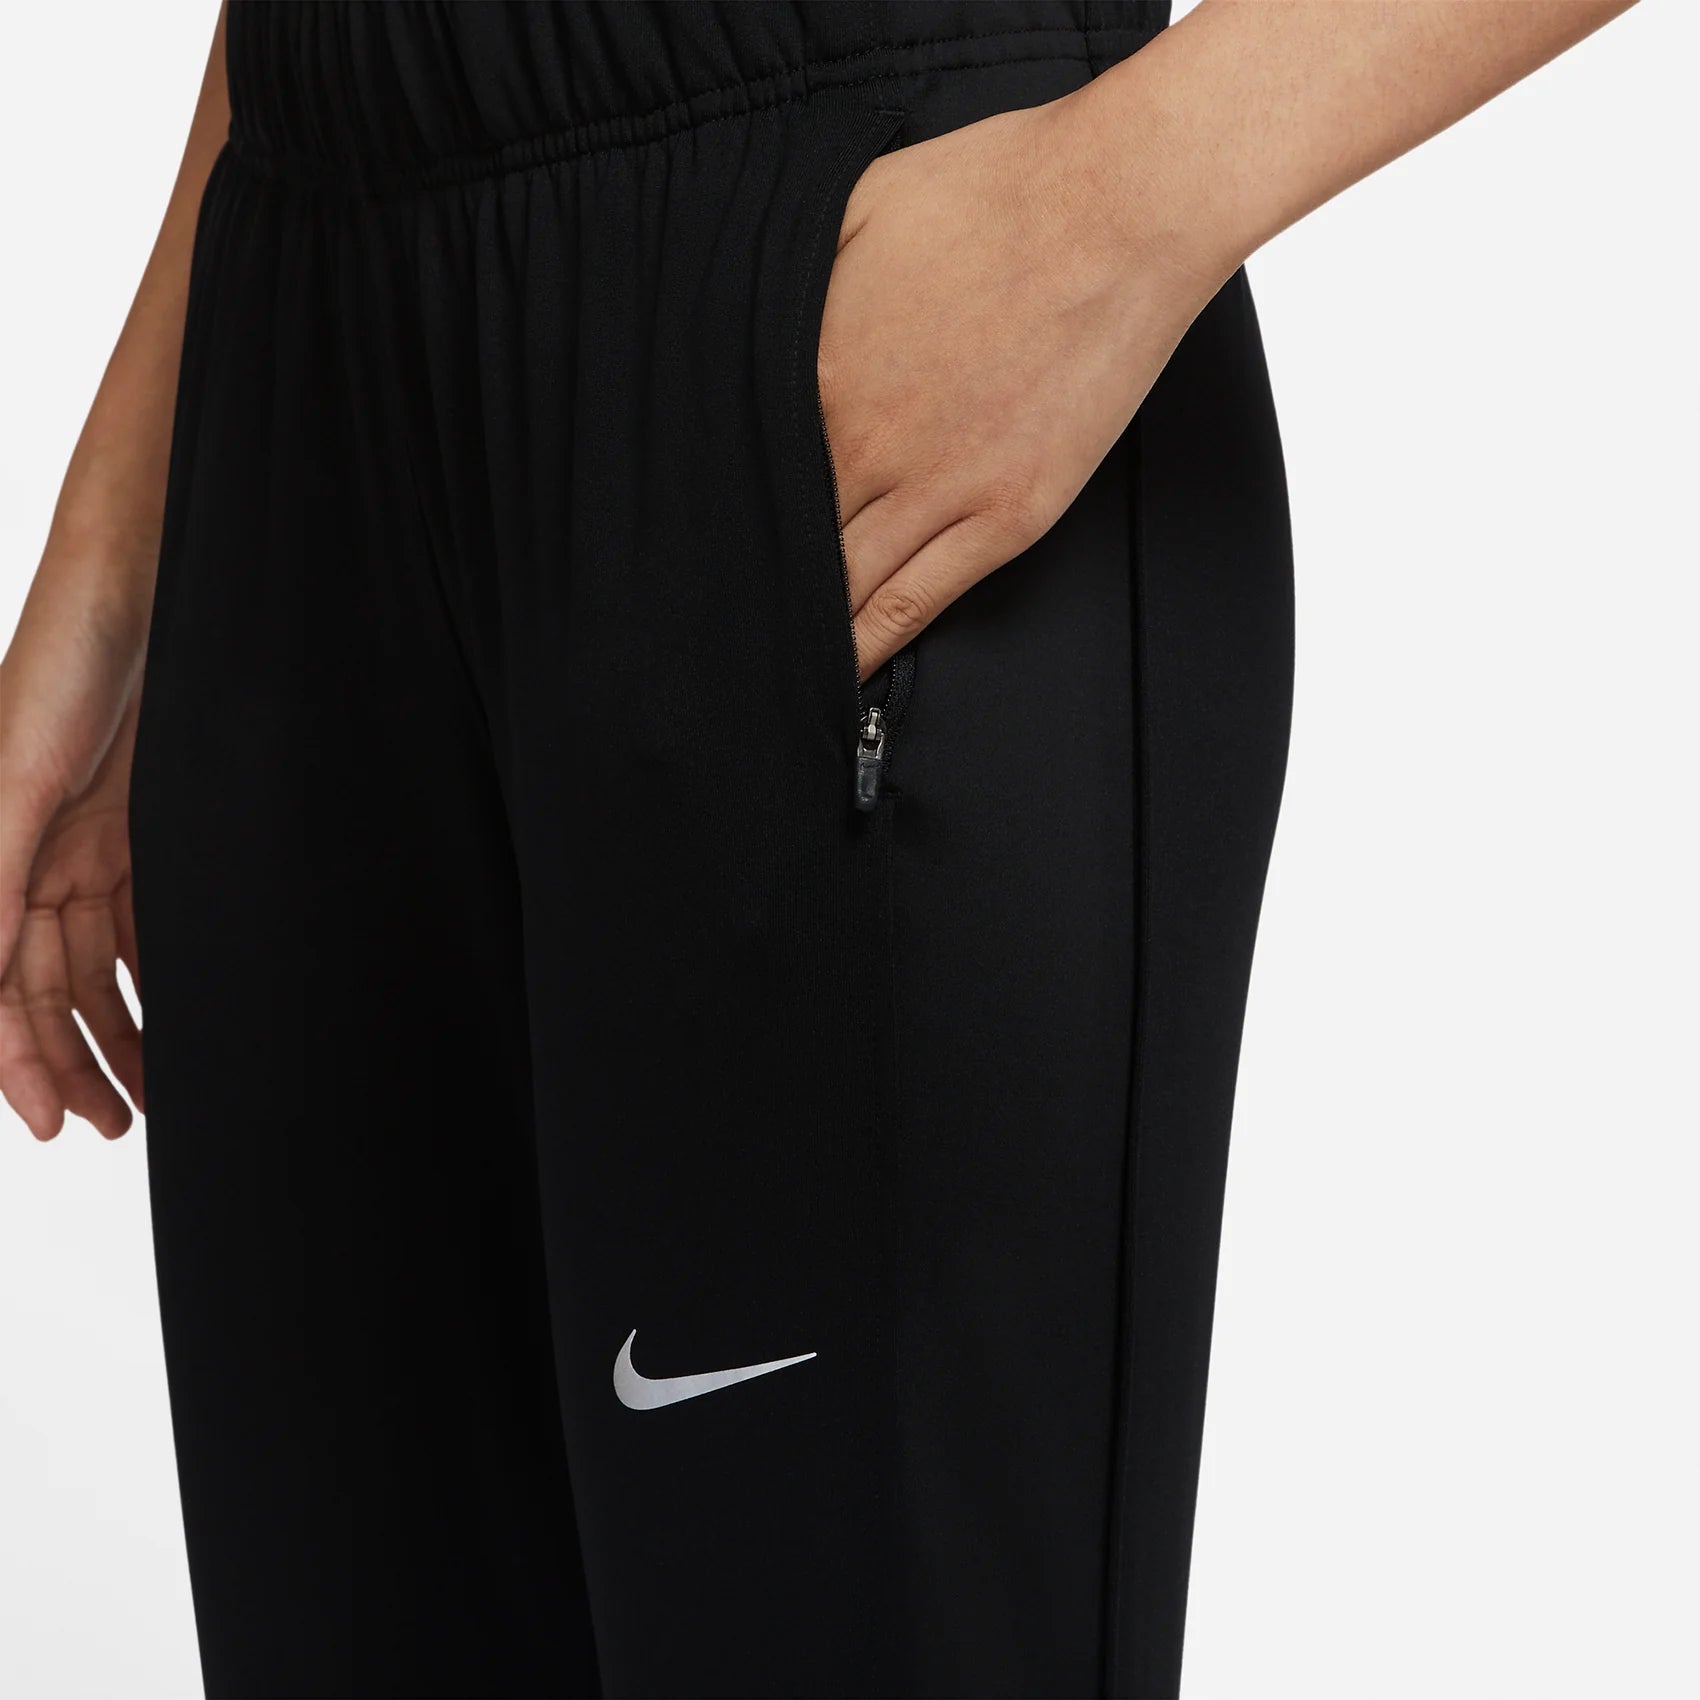 Nike Women's S Athletic Dri-FIT Pants Black 686117-451 Running